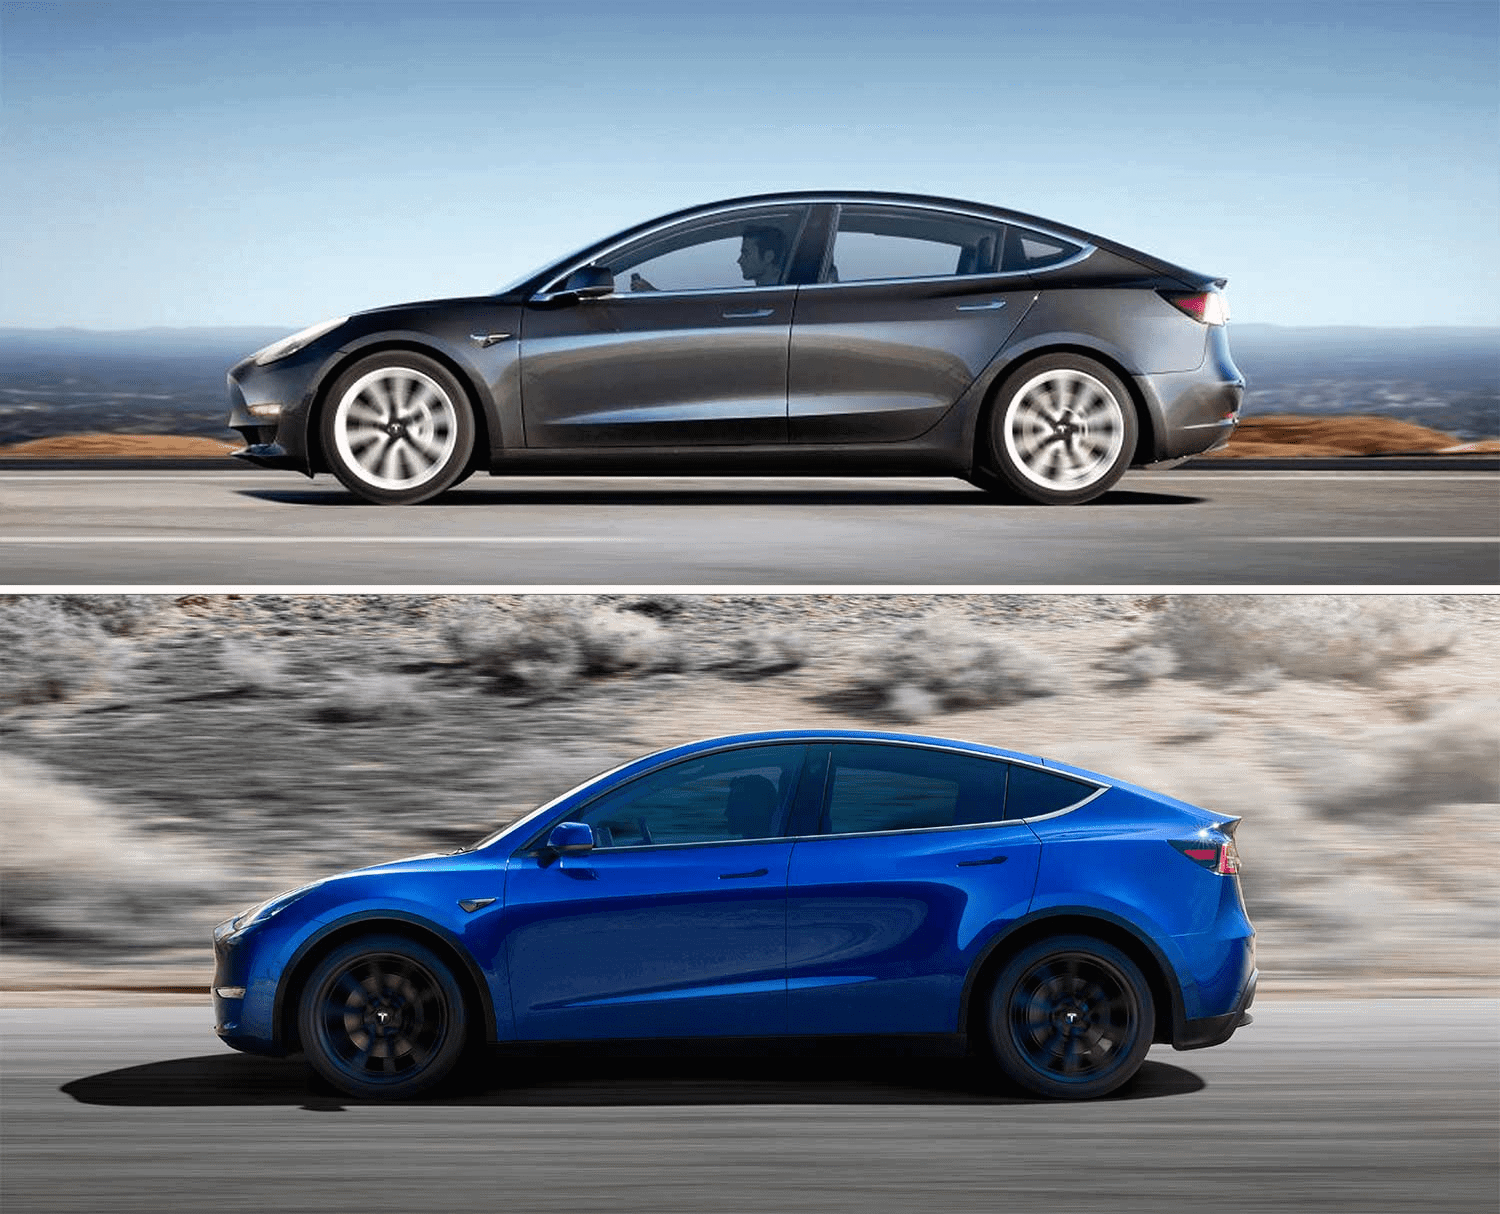 Tesla Model Y ou Model 3 propulsion : quel modèle choisir ? - Numerama